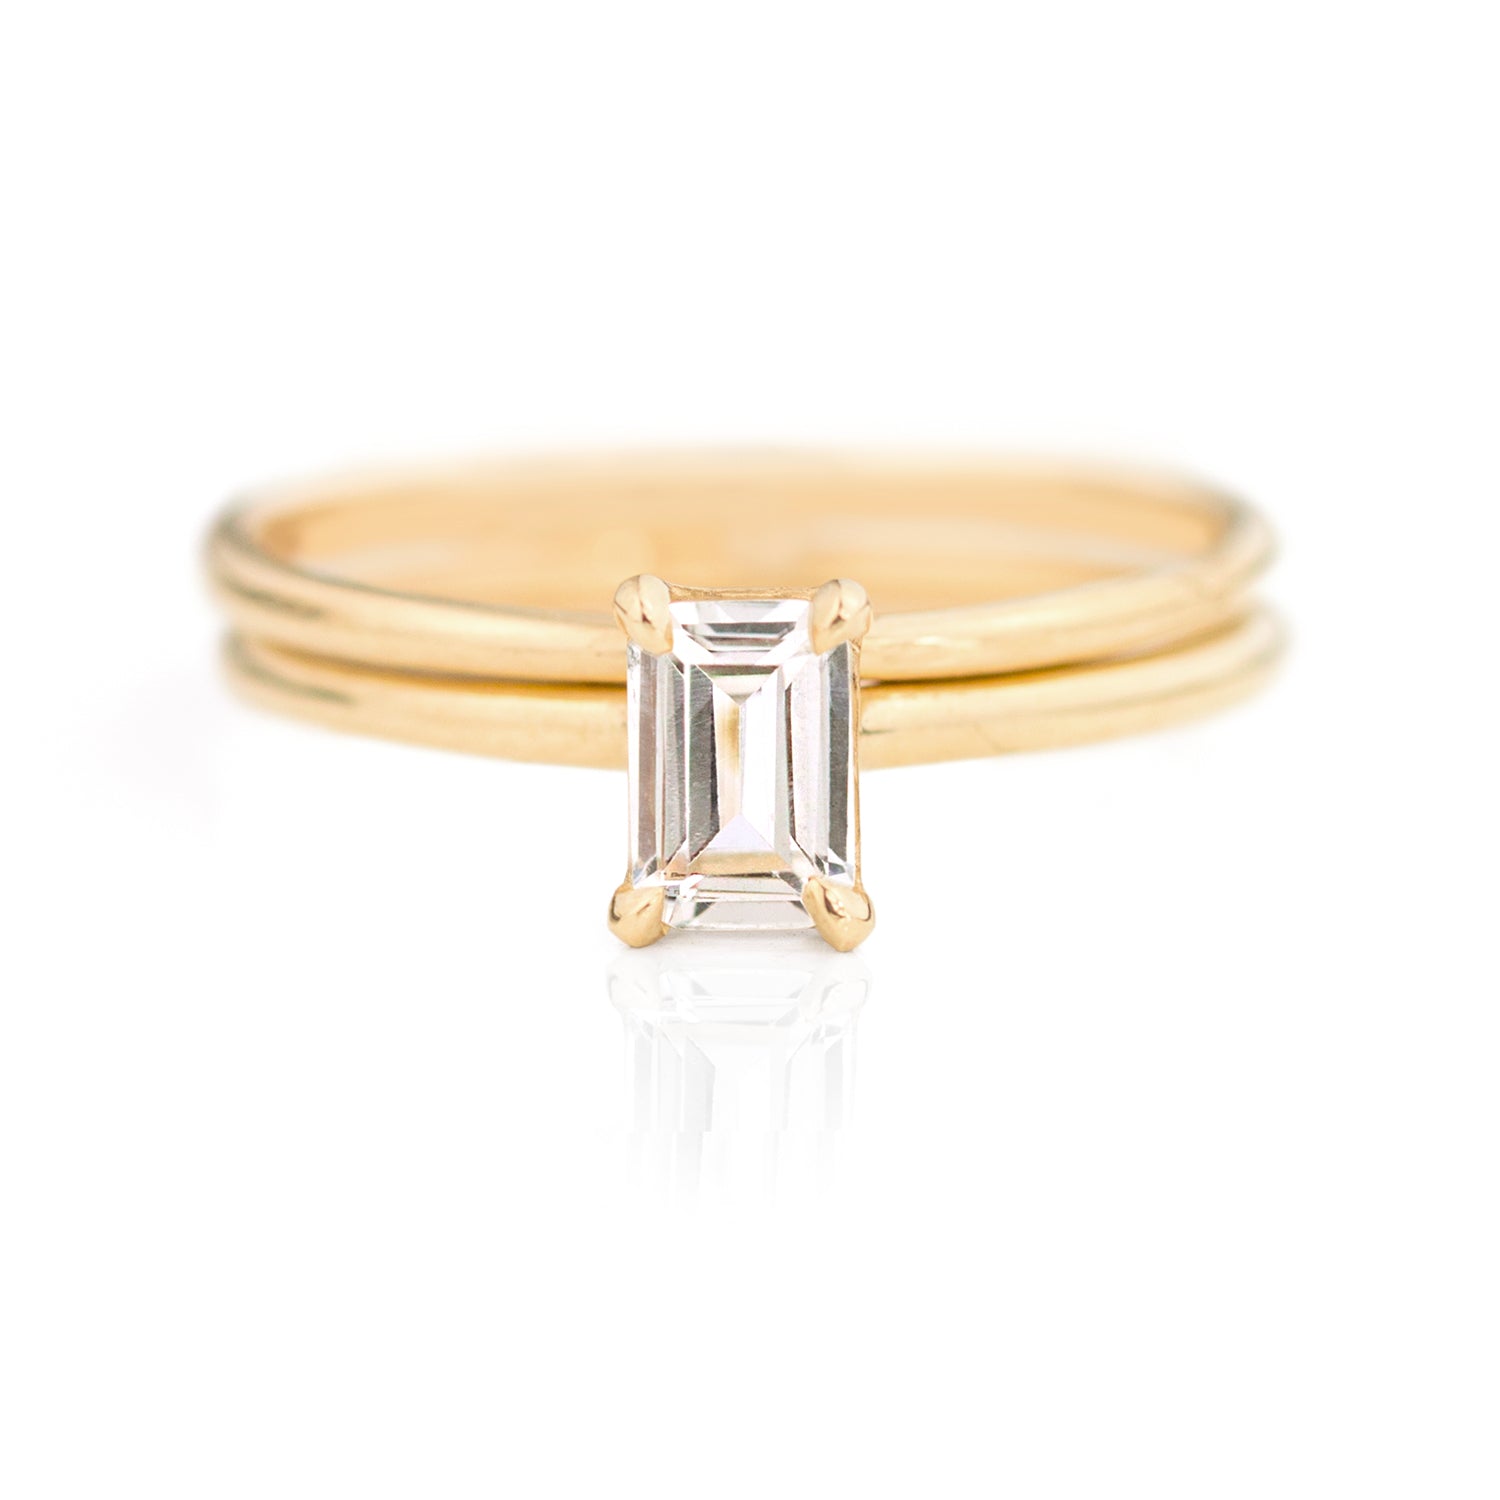 Emerald Cut White Sapphire Ring Set